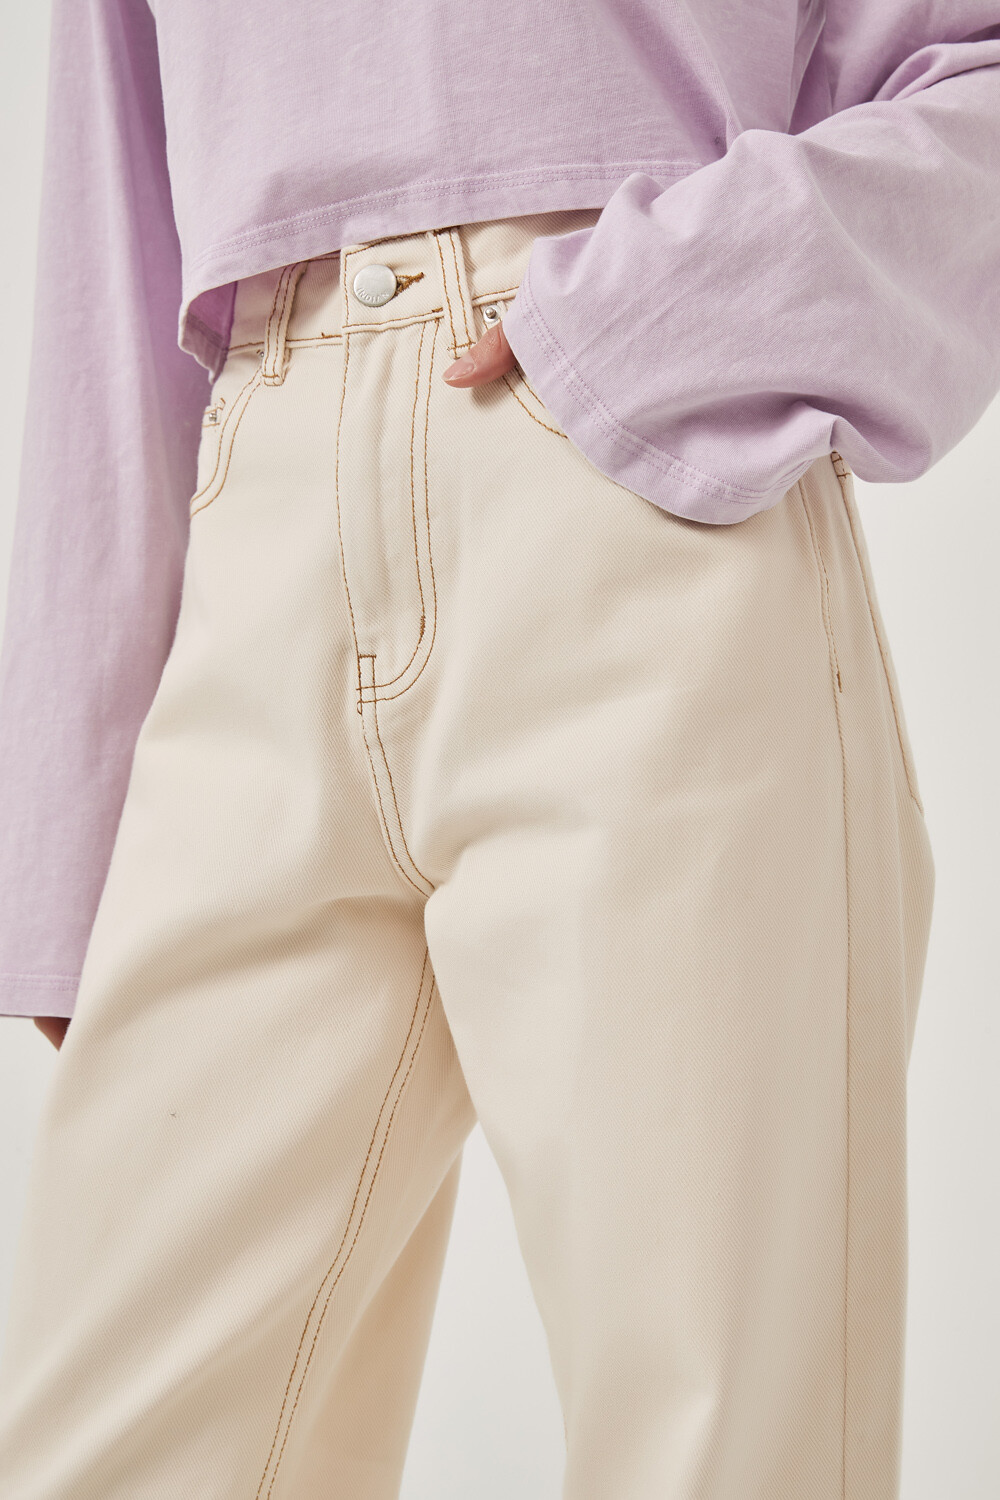 Pantalon Inmaculate Crudo / Natural